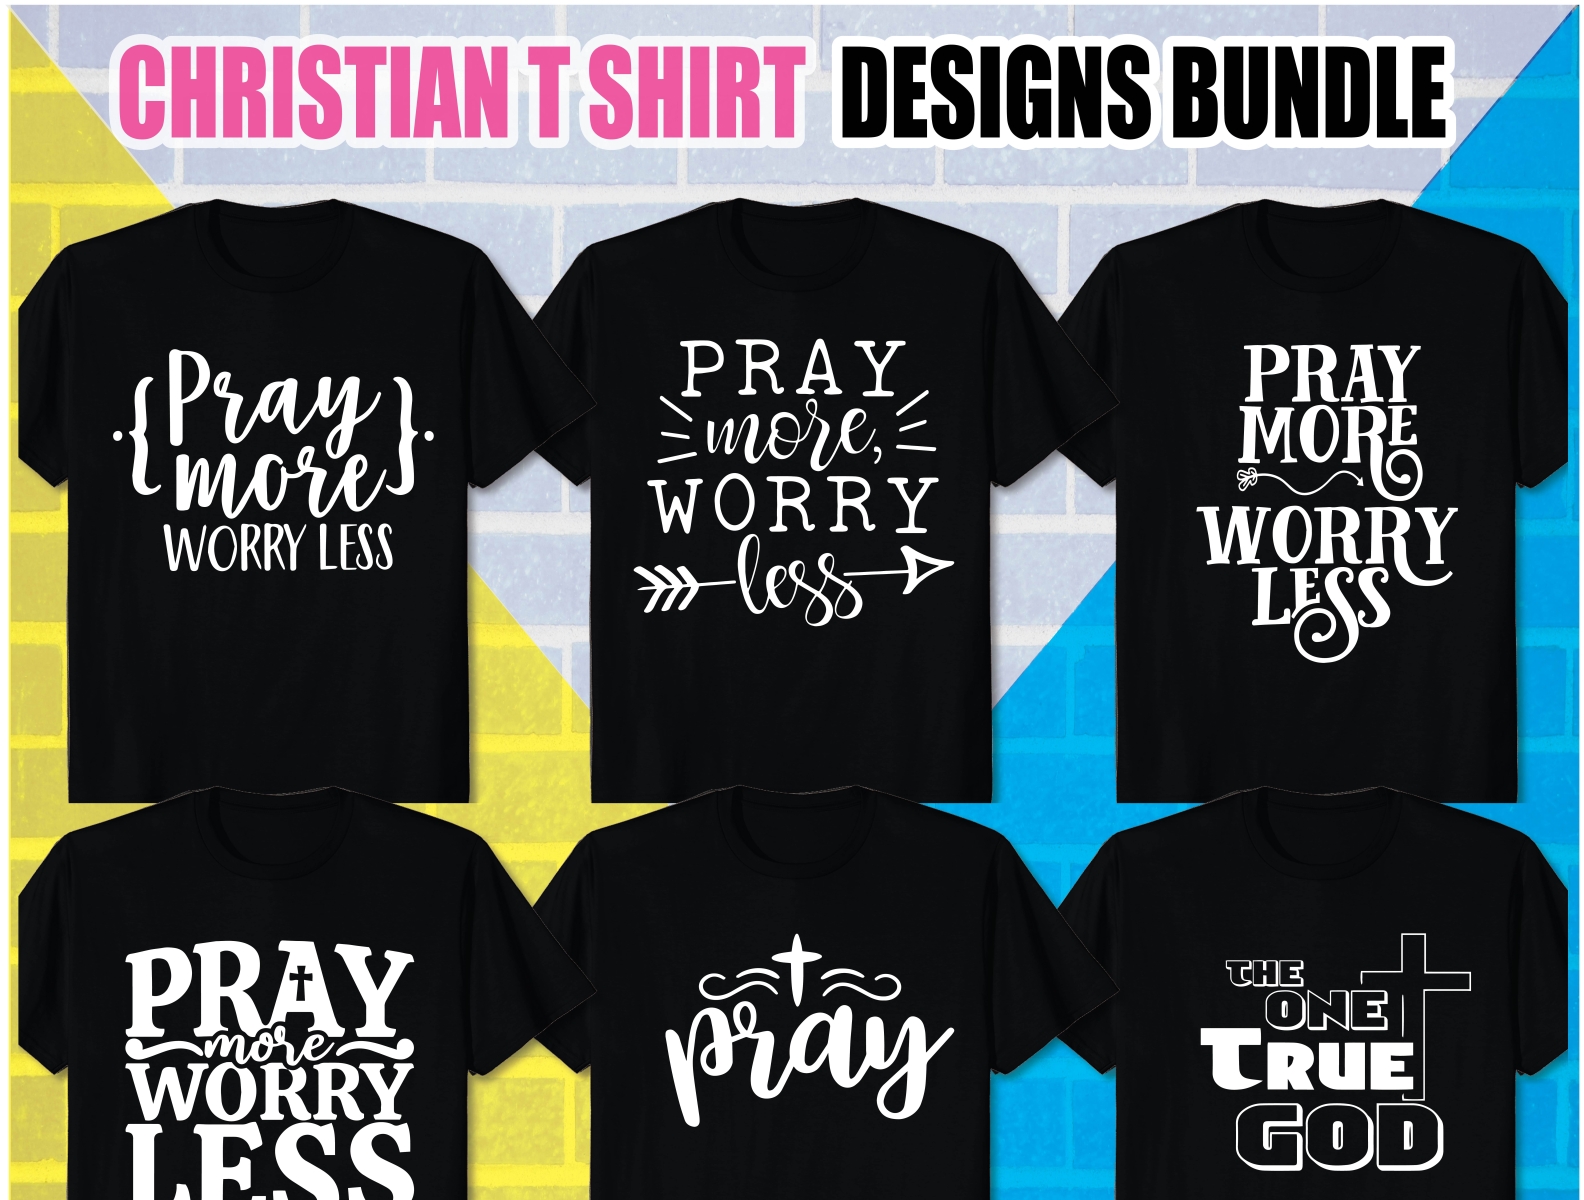 Christian or Jesus T shirt Design Bundle by Mst. Fency Ara on Dribbble